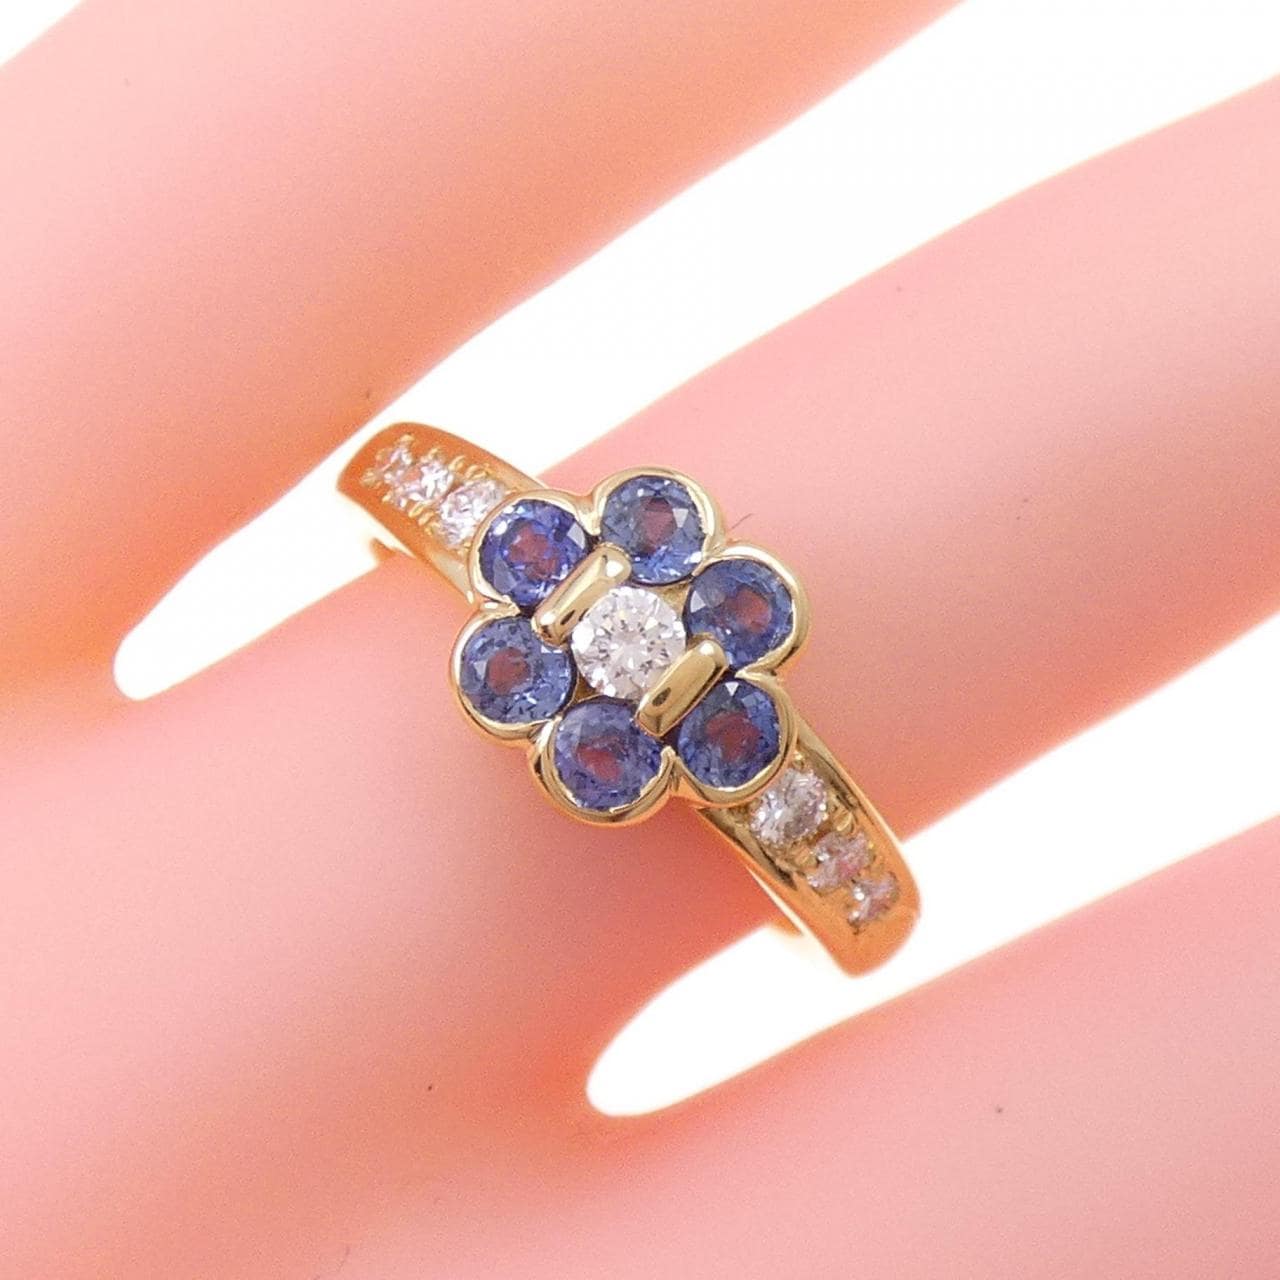 K18YG Flower Sapphire Ring 0.65CT